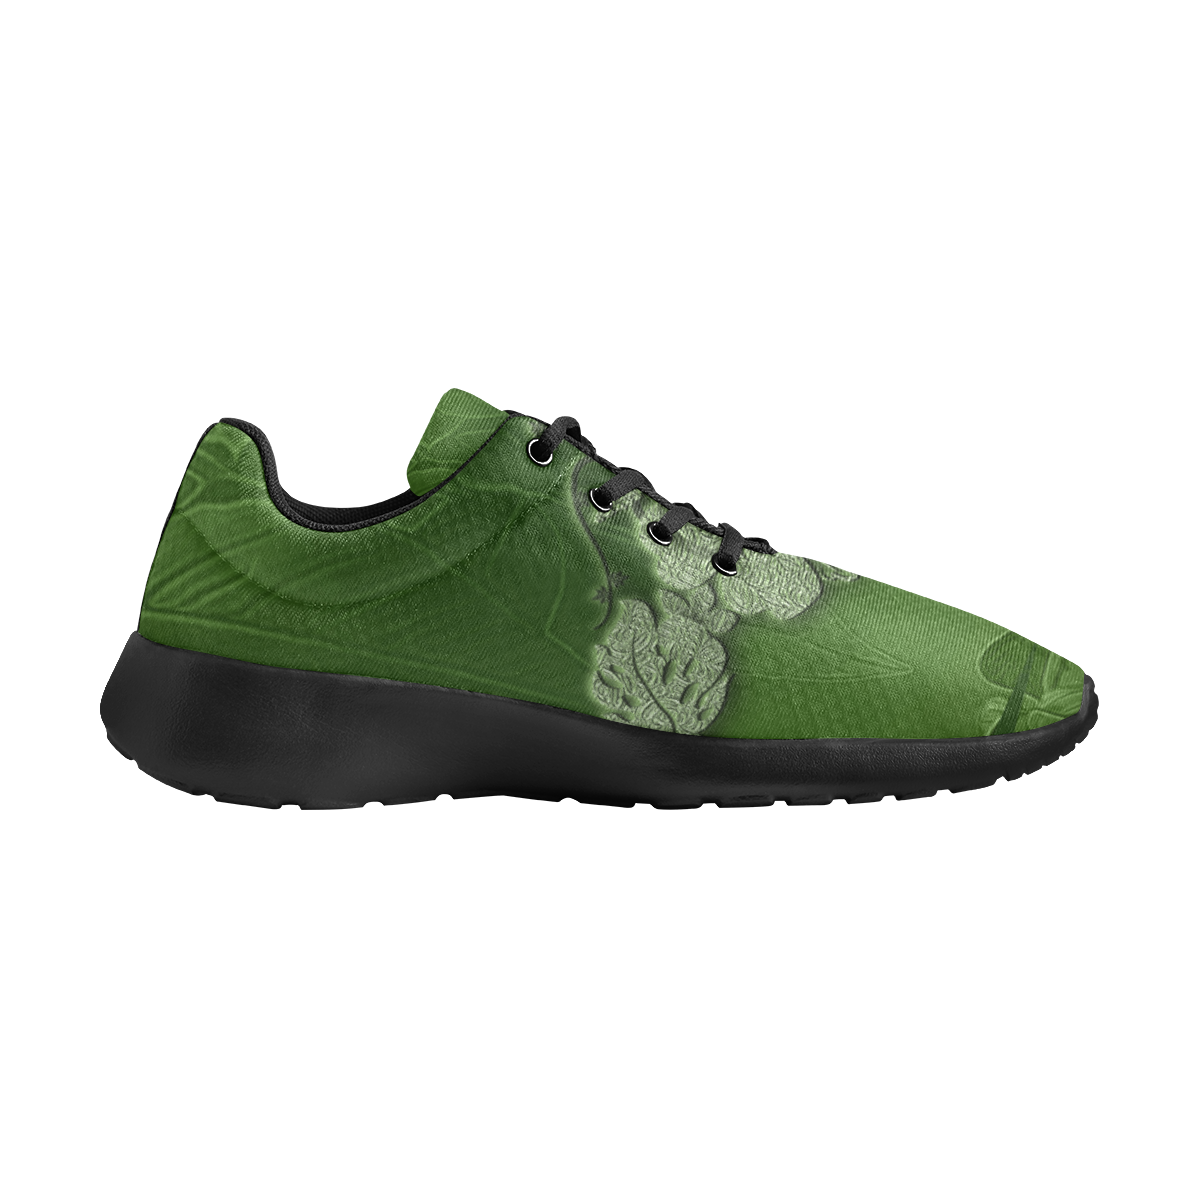 Wonderful green floral design Women's Athletic Shoes (Model 0200)